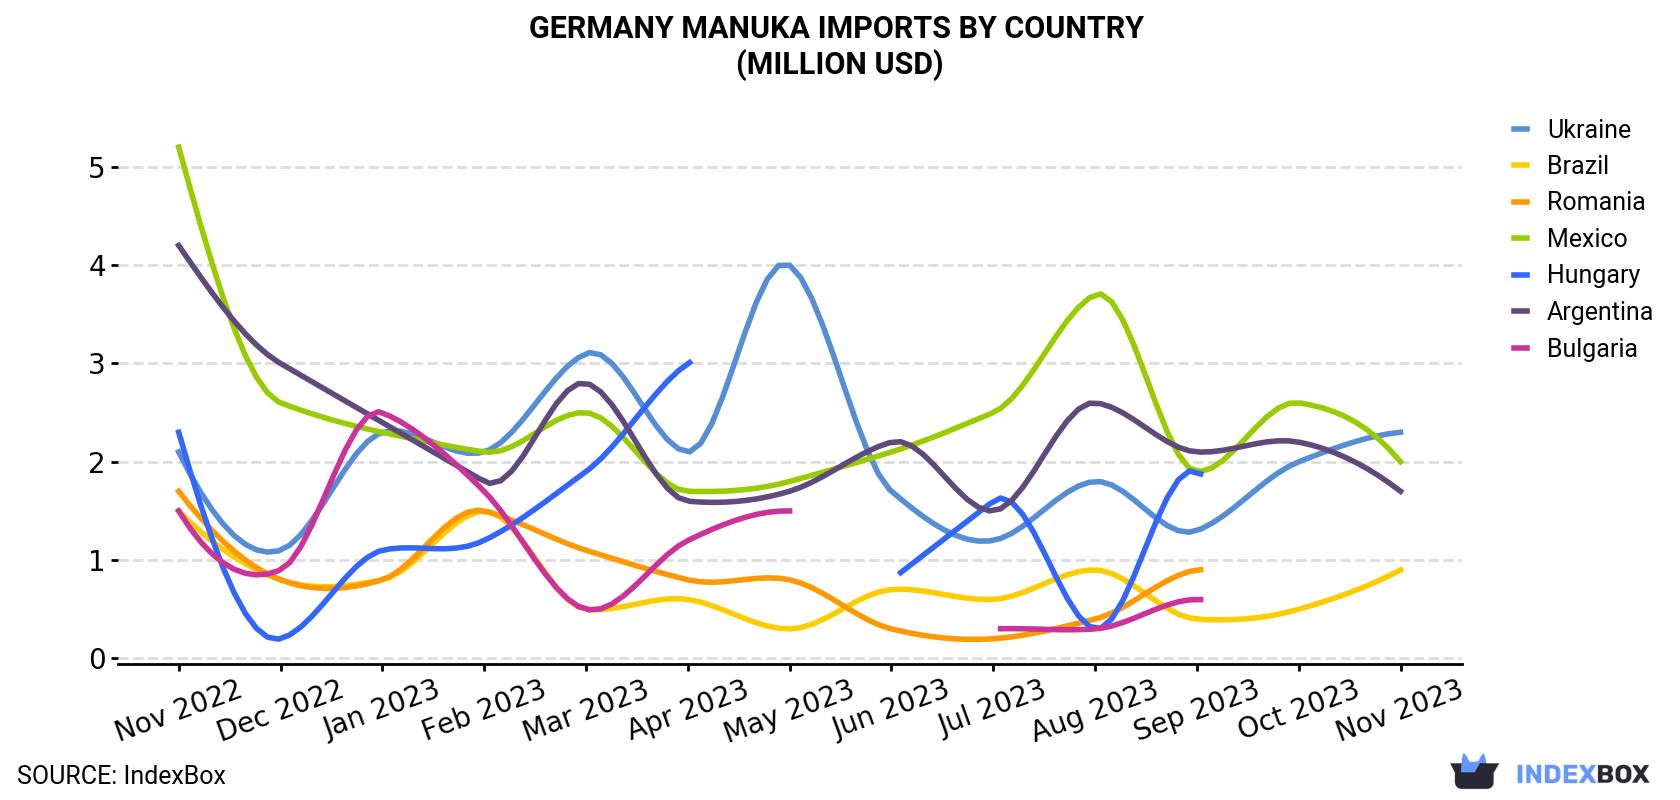 Germany Manuka Imports By Country (Million USD)